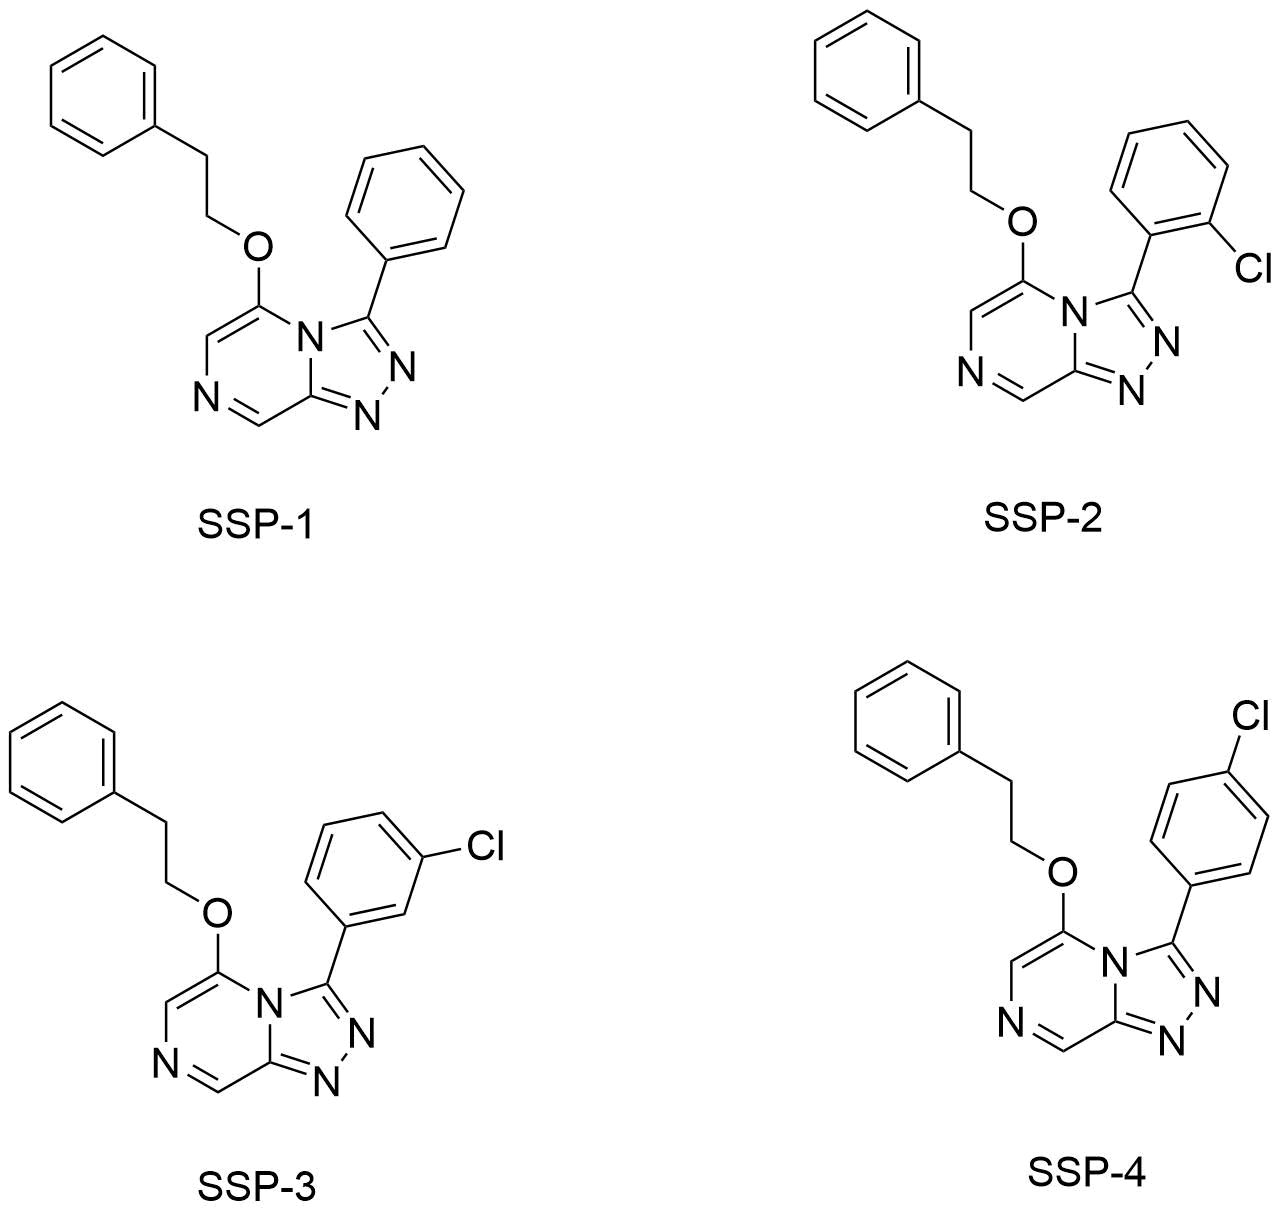 SSP compounds